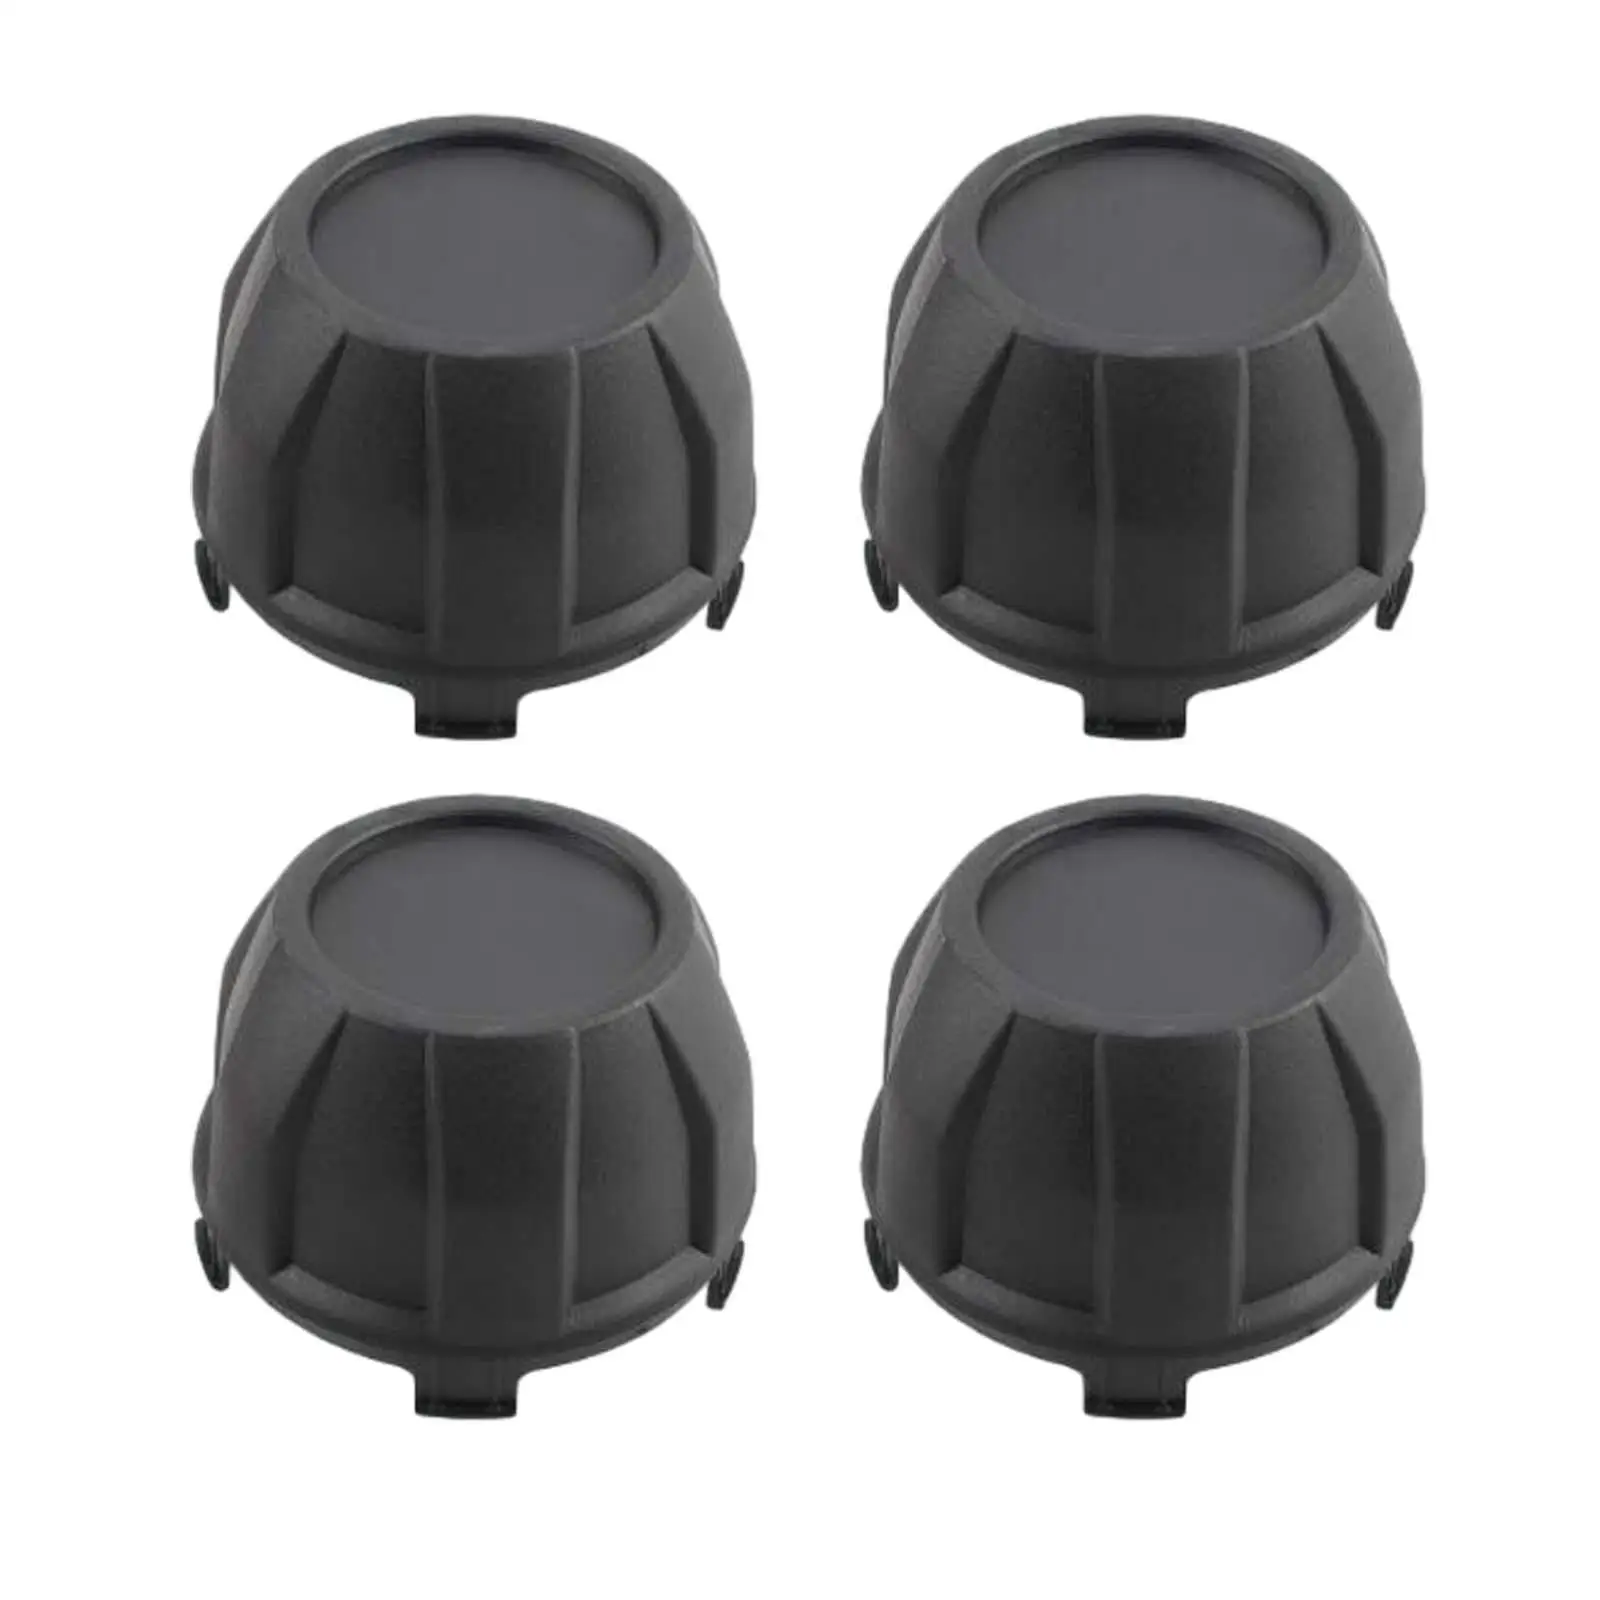 4x Wheel Center Hub Caps Accessories for Kawasaki Krx 1000 Professional